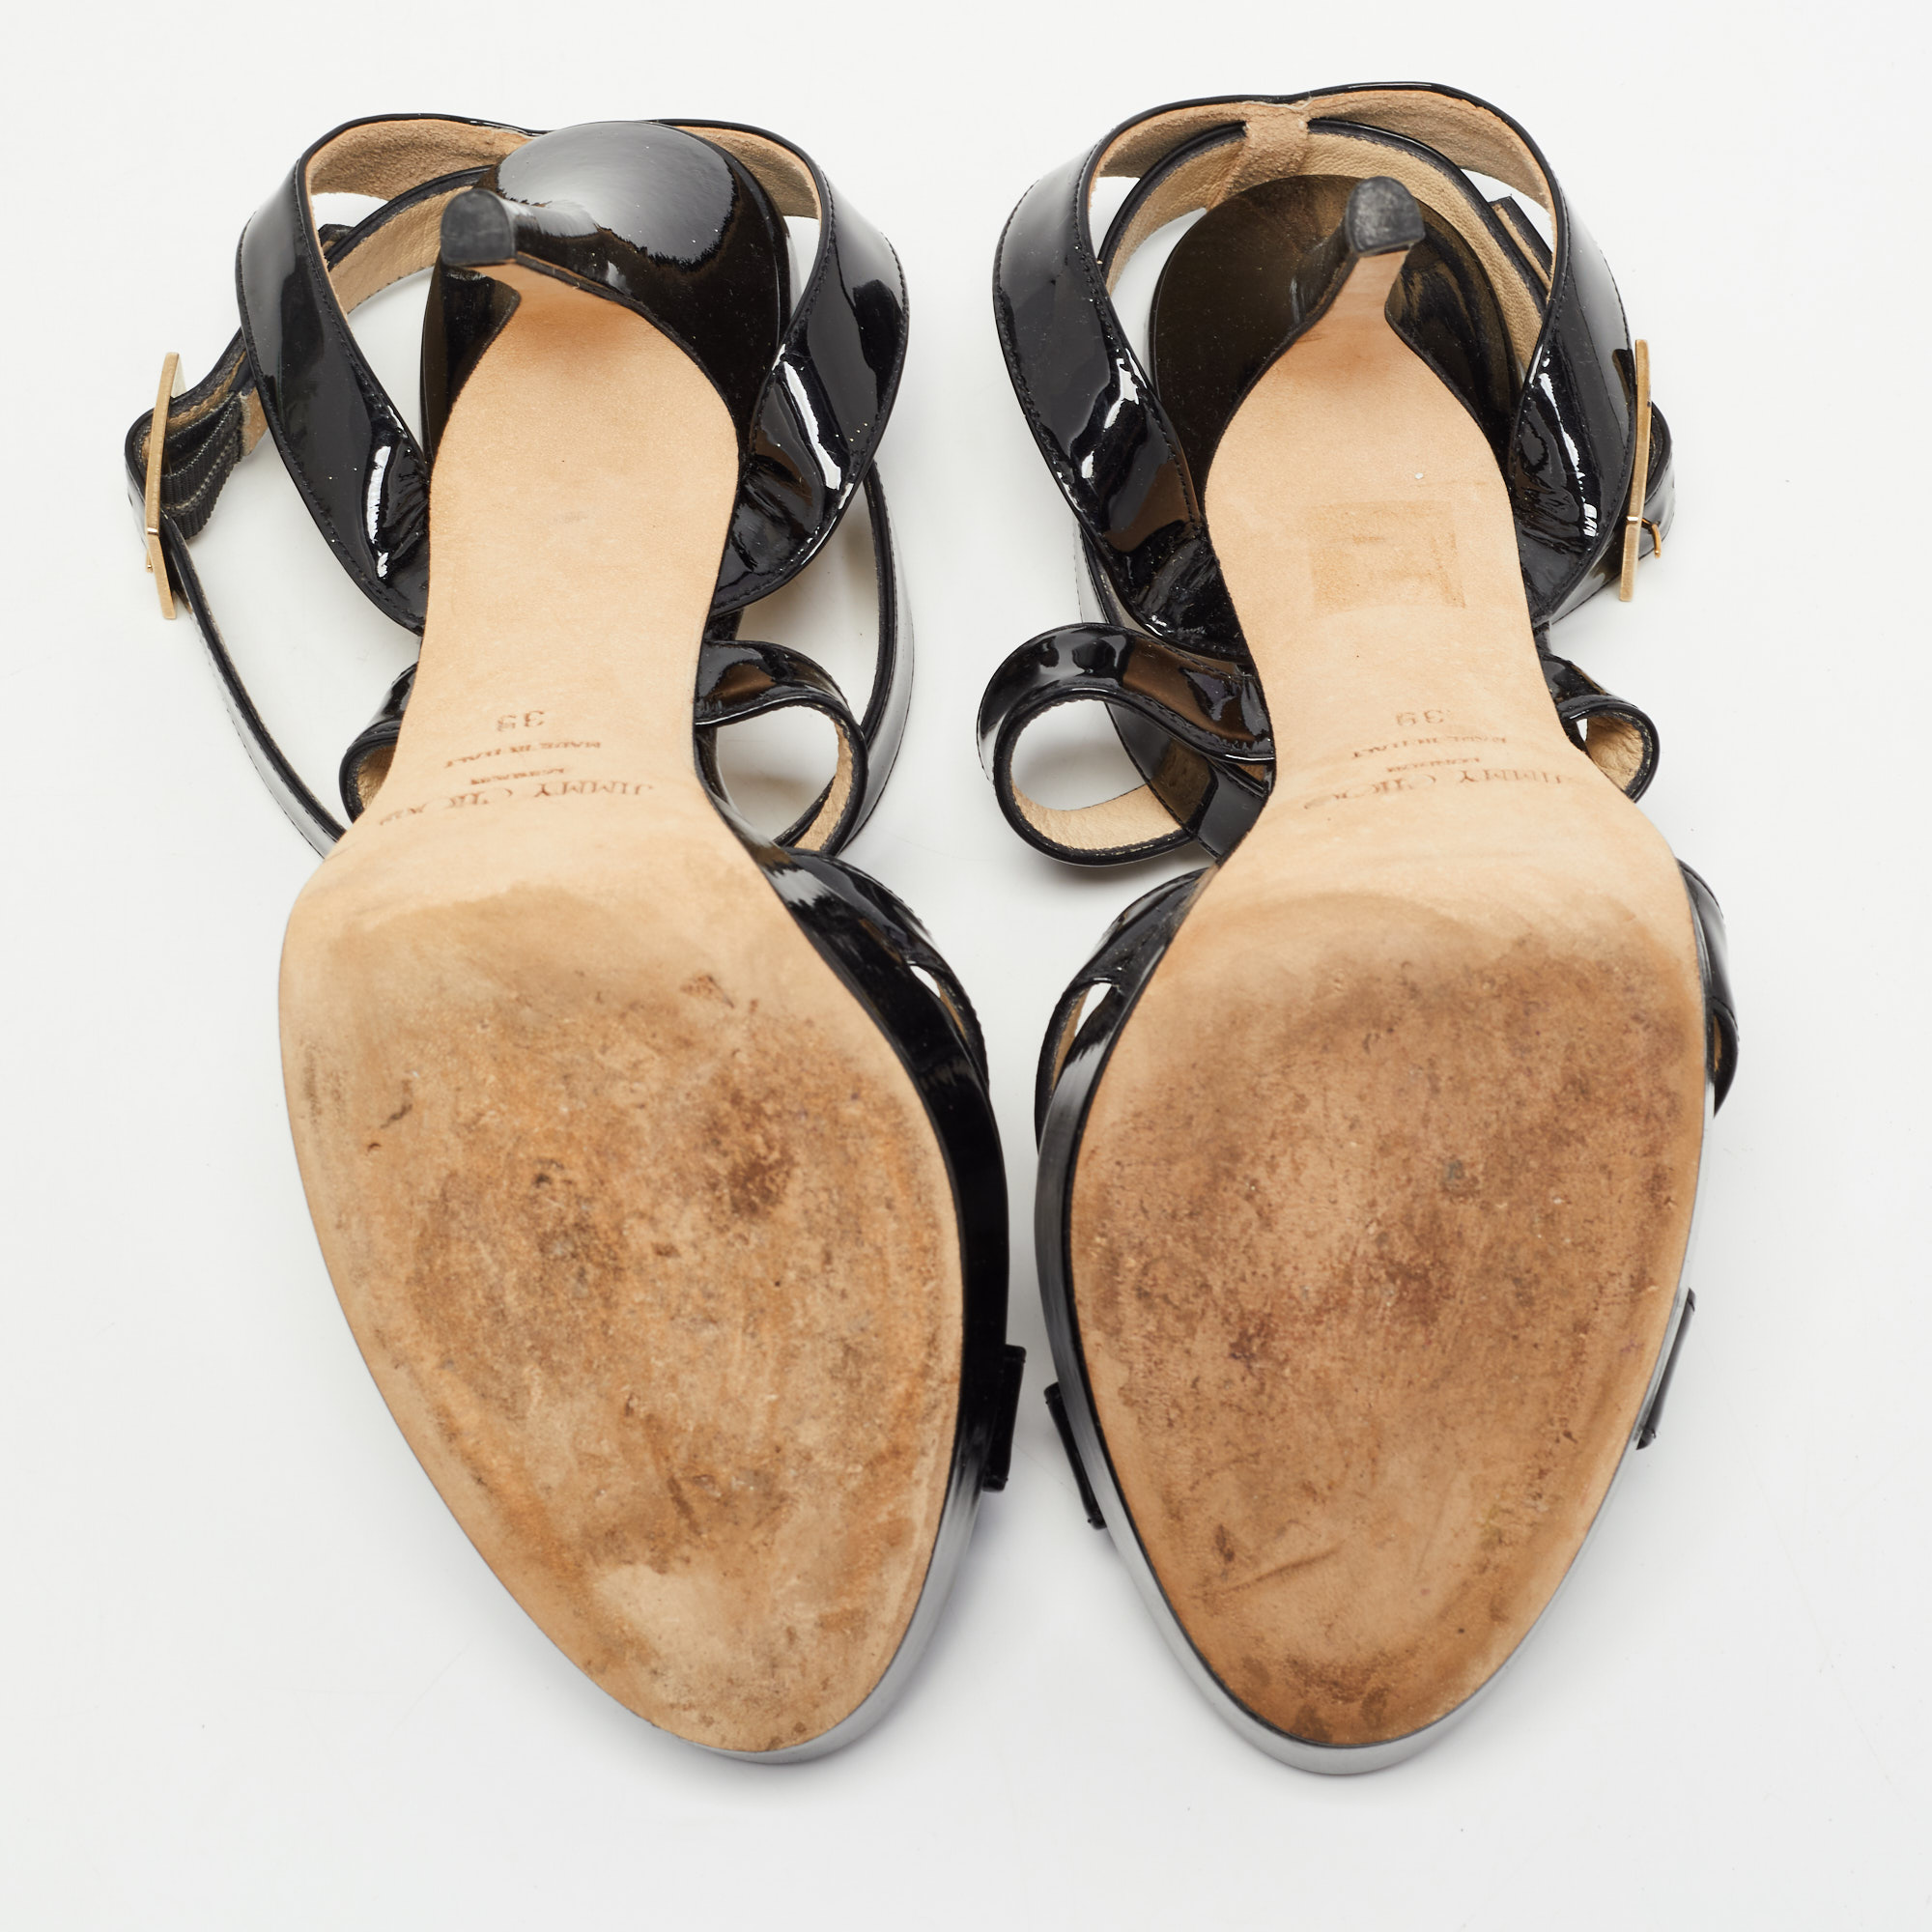 Jimmy Choo Black Patent Leather Vamp Platform Sandals Size 39